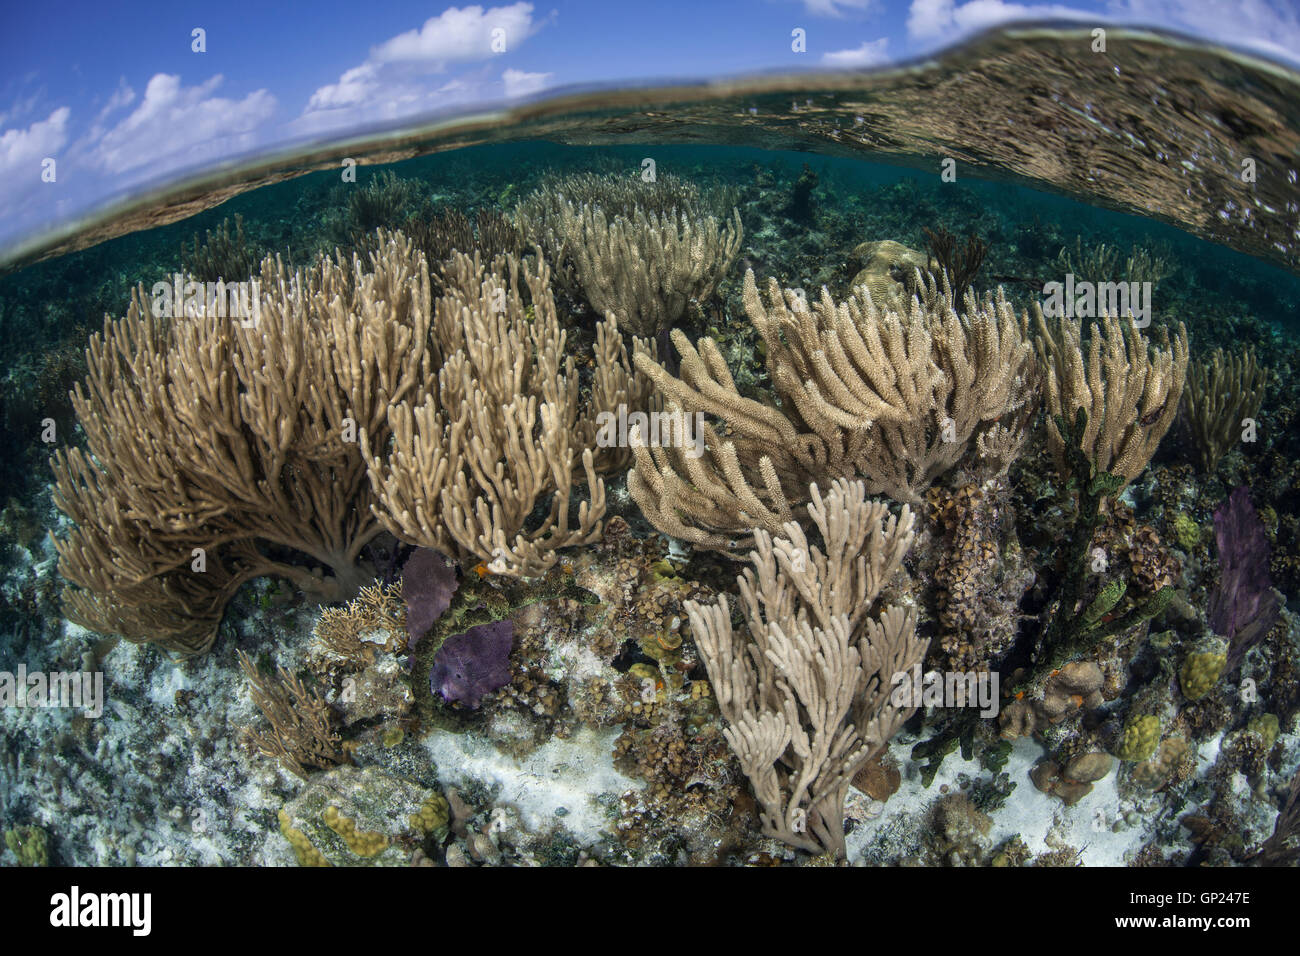 Karibische Korallenriff mit Sea Rod, Pseudoplexaura Porosa Turneffe Atoll, Karibik, Belize Stockfoto